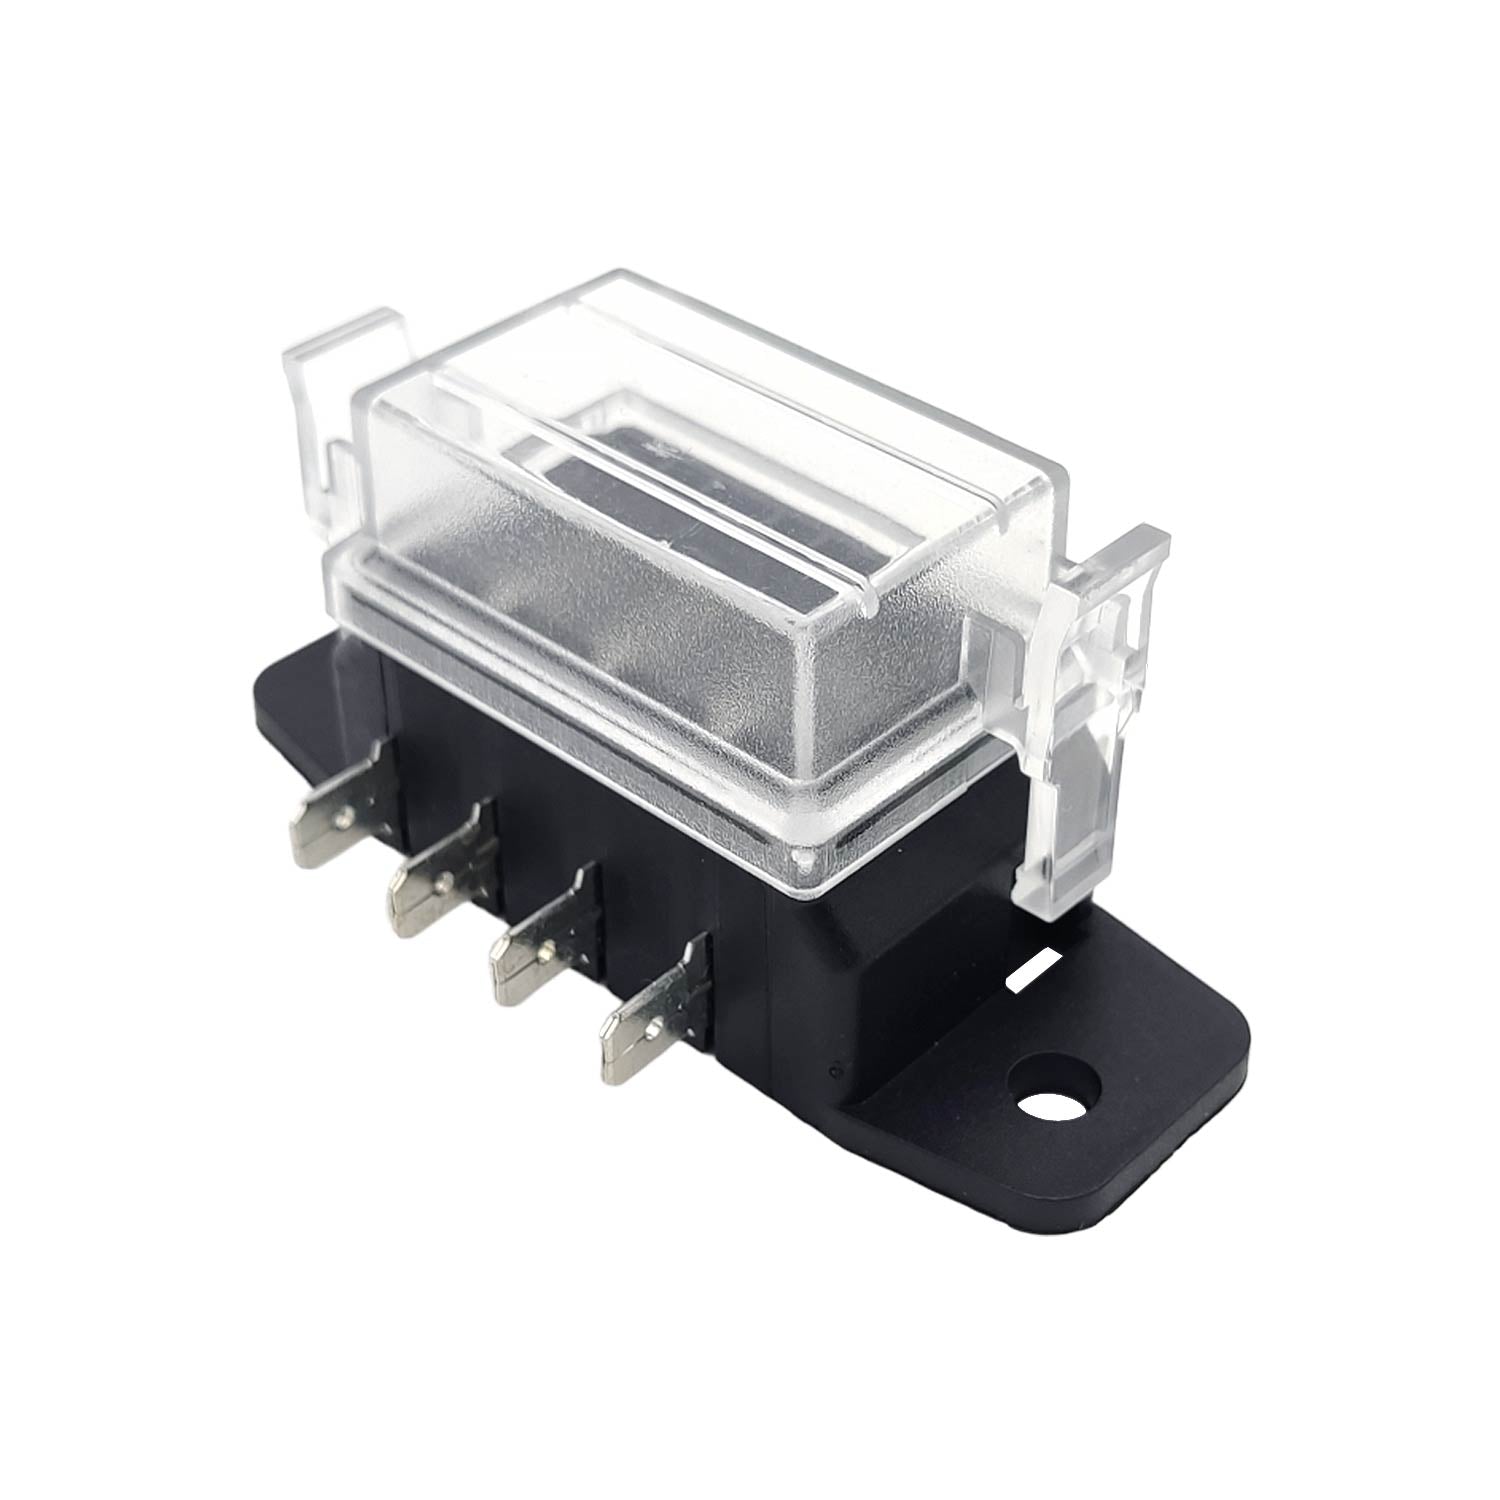 4-piece fuse box ATO/ATC fuse block with external plug Max: 32V